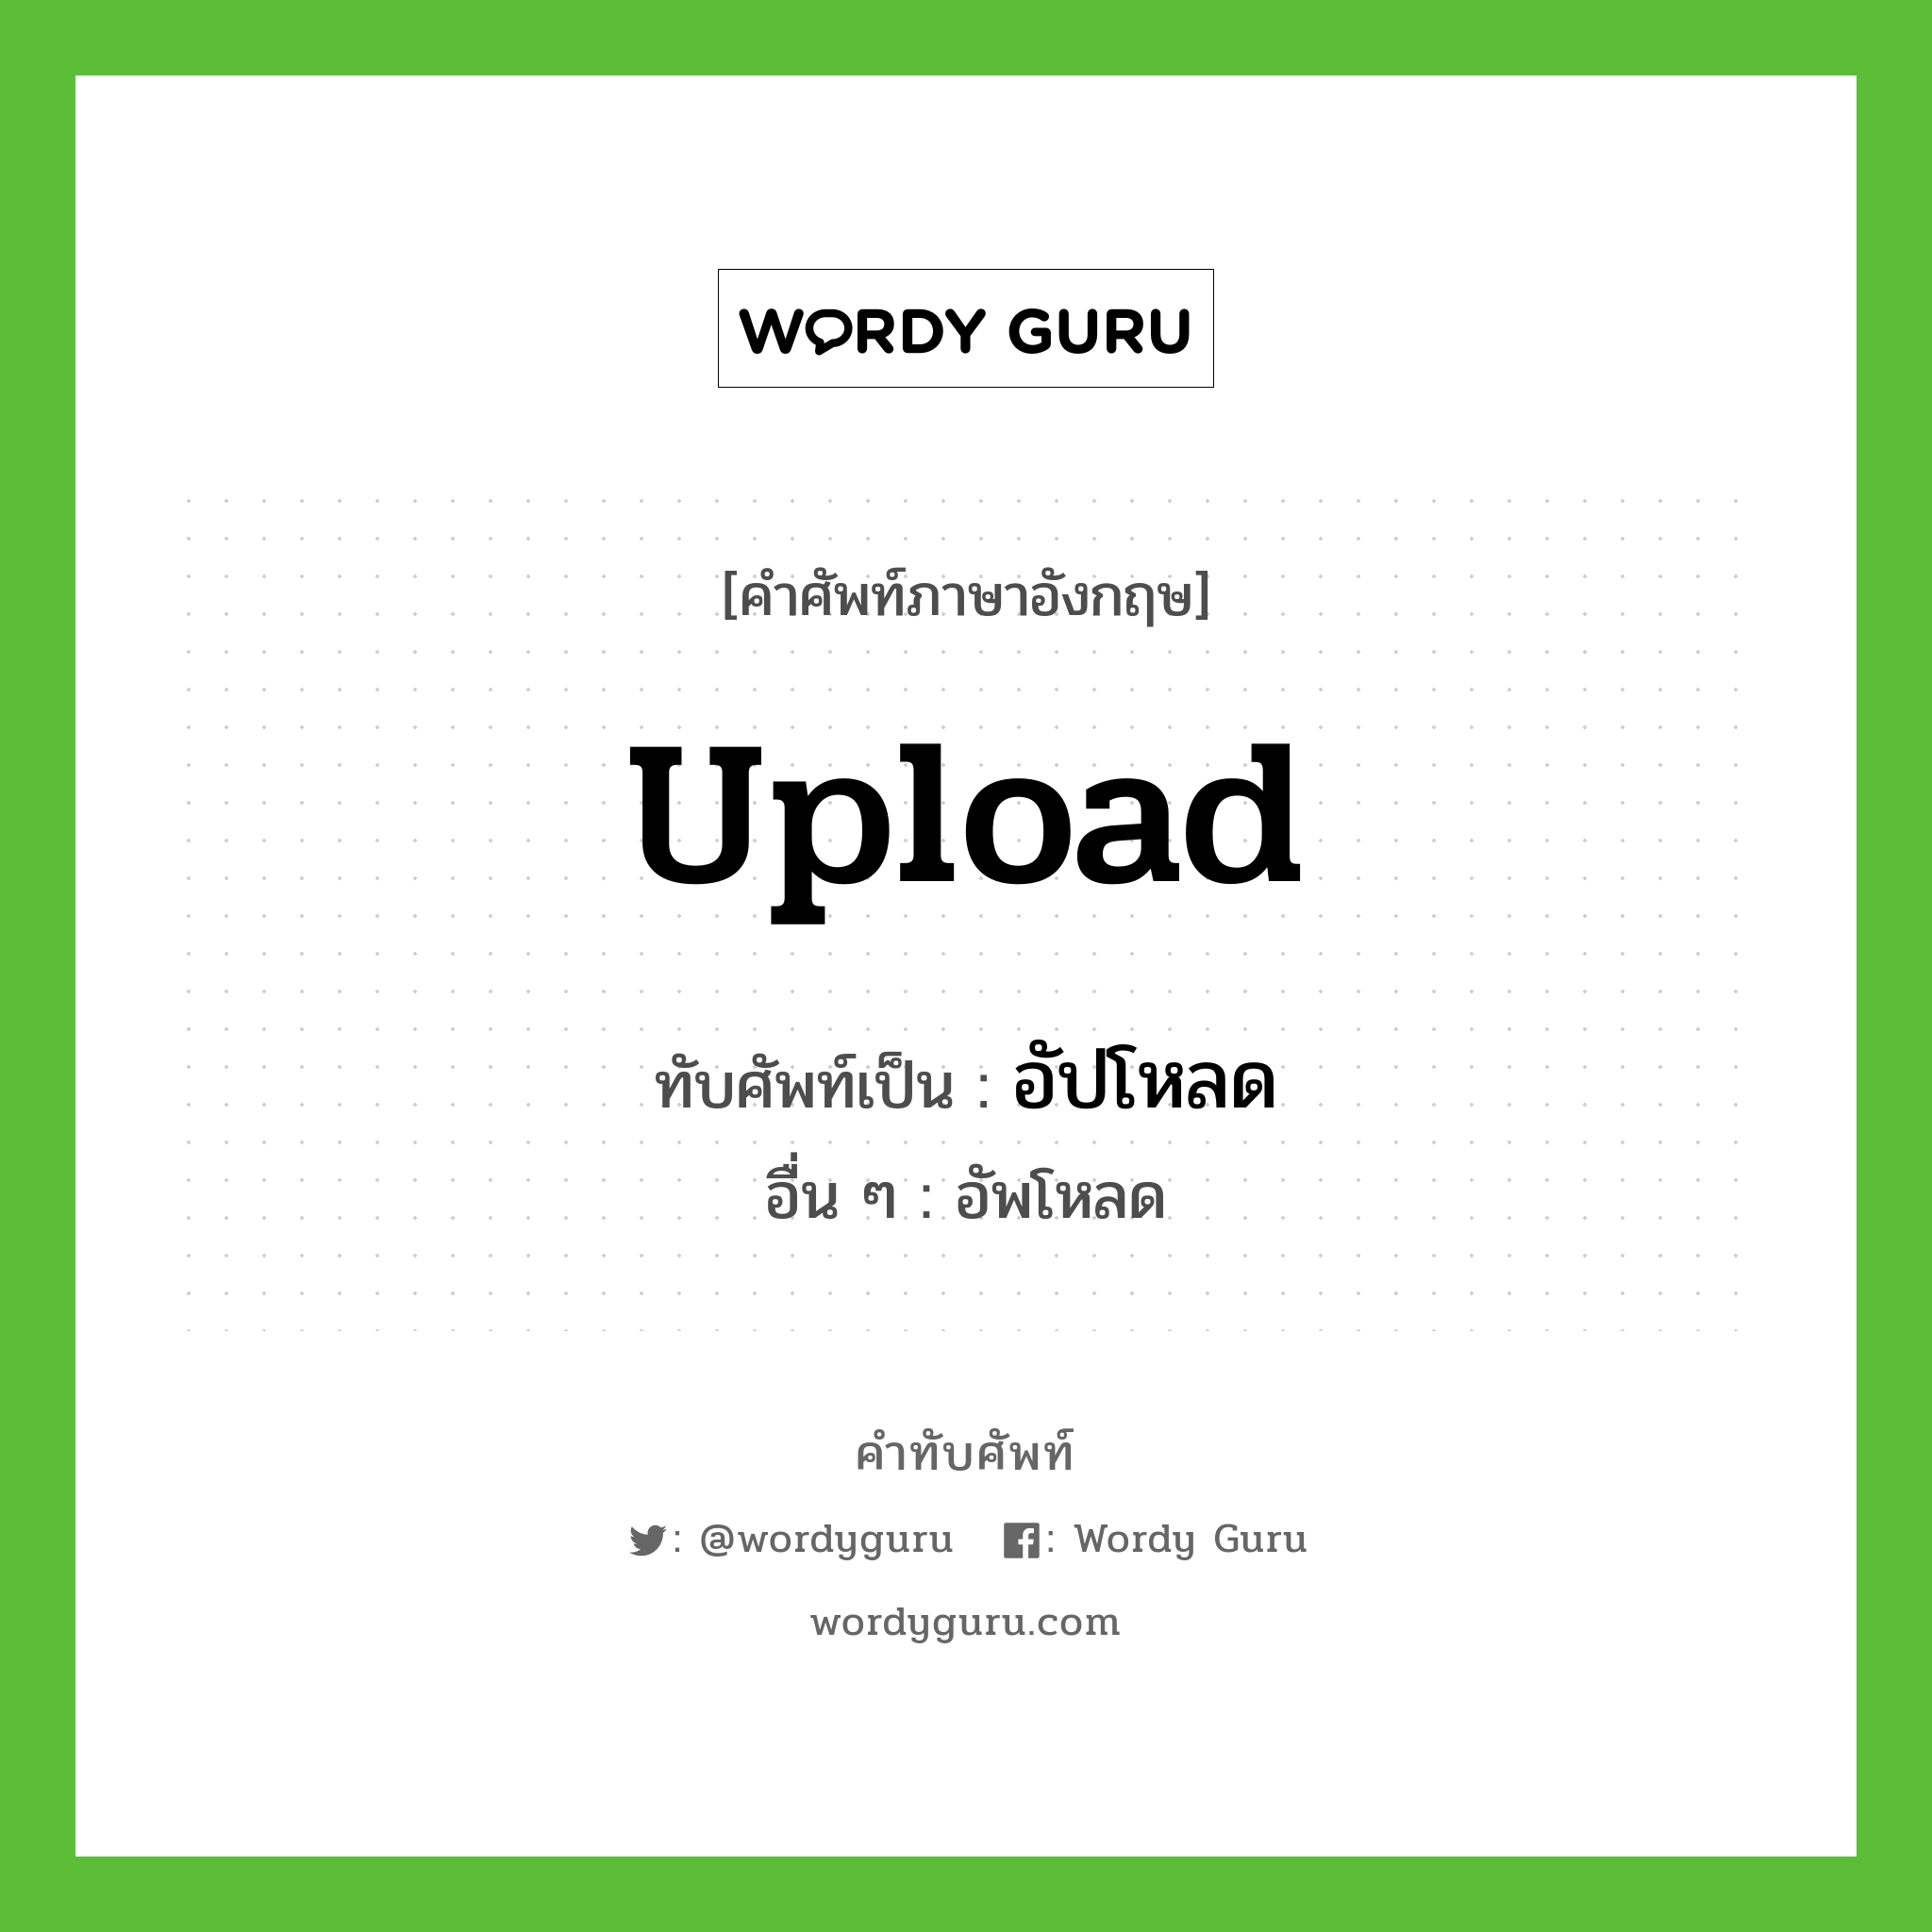 upload เขียนเป็นคำไทยว่าอะไร?, คำศัพท์ภาษาอังกฤษ upload ทับศัพท์เป็น อัปโหลด อื่น ๆ อัพโหลด